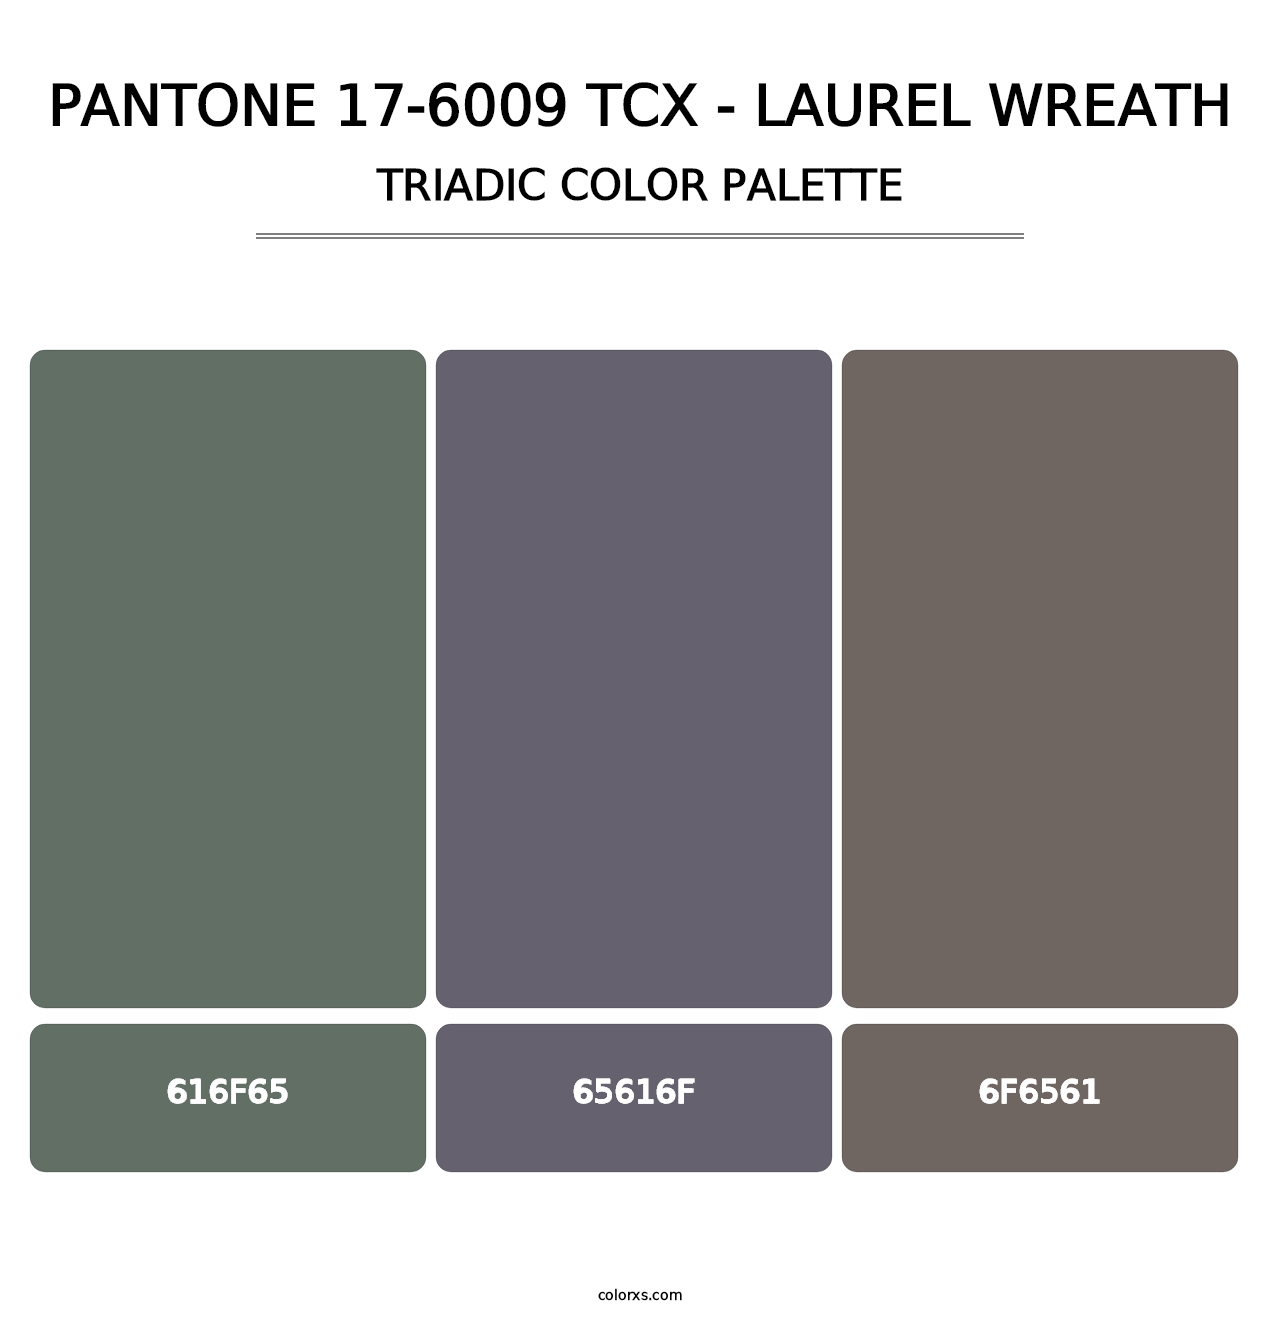 PANTONE 17-6009 TCX - Laurel Wreath - Triadic Color Palette